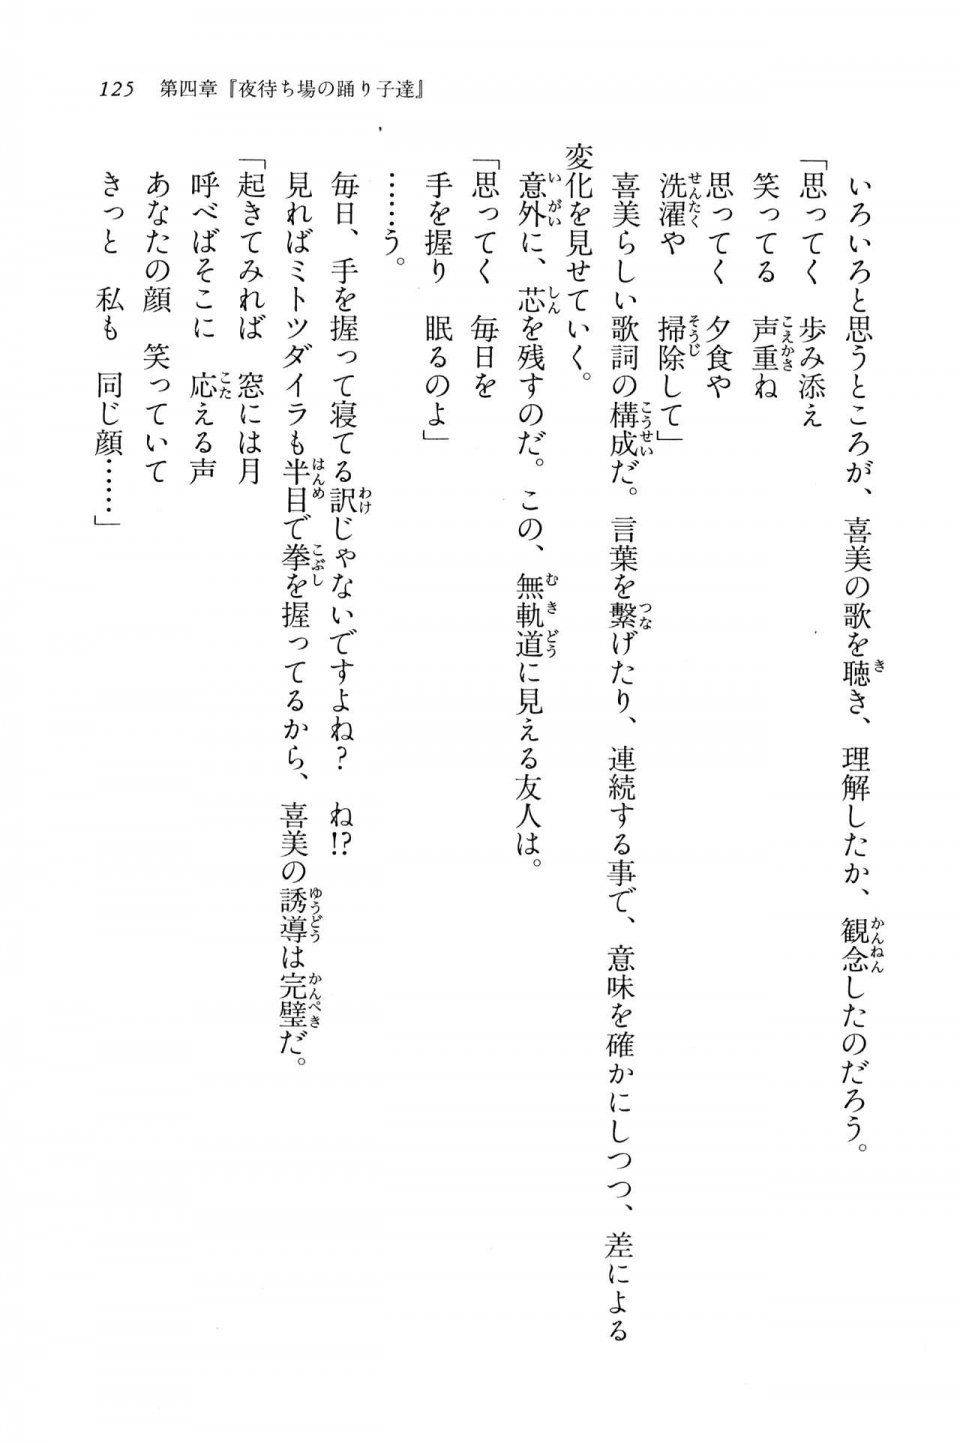 Kyoukai Senjou no Horizon BD Special Mininovel Vol 7(4A) - Photo #129